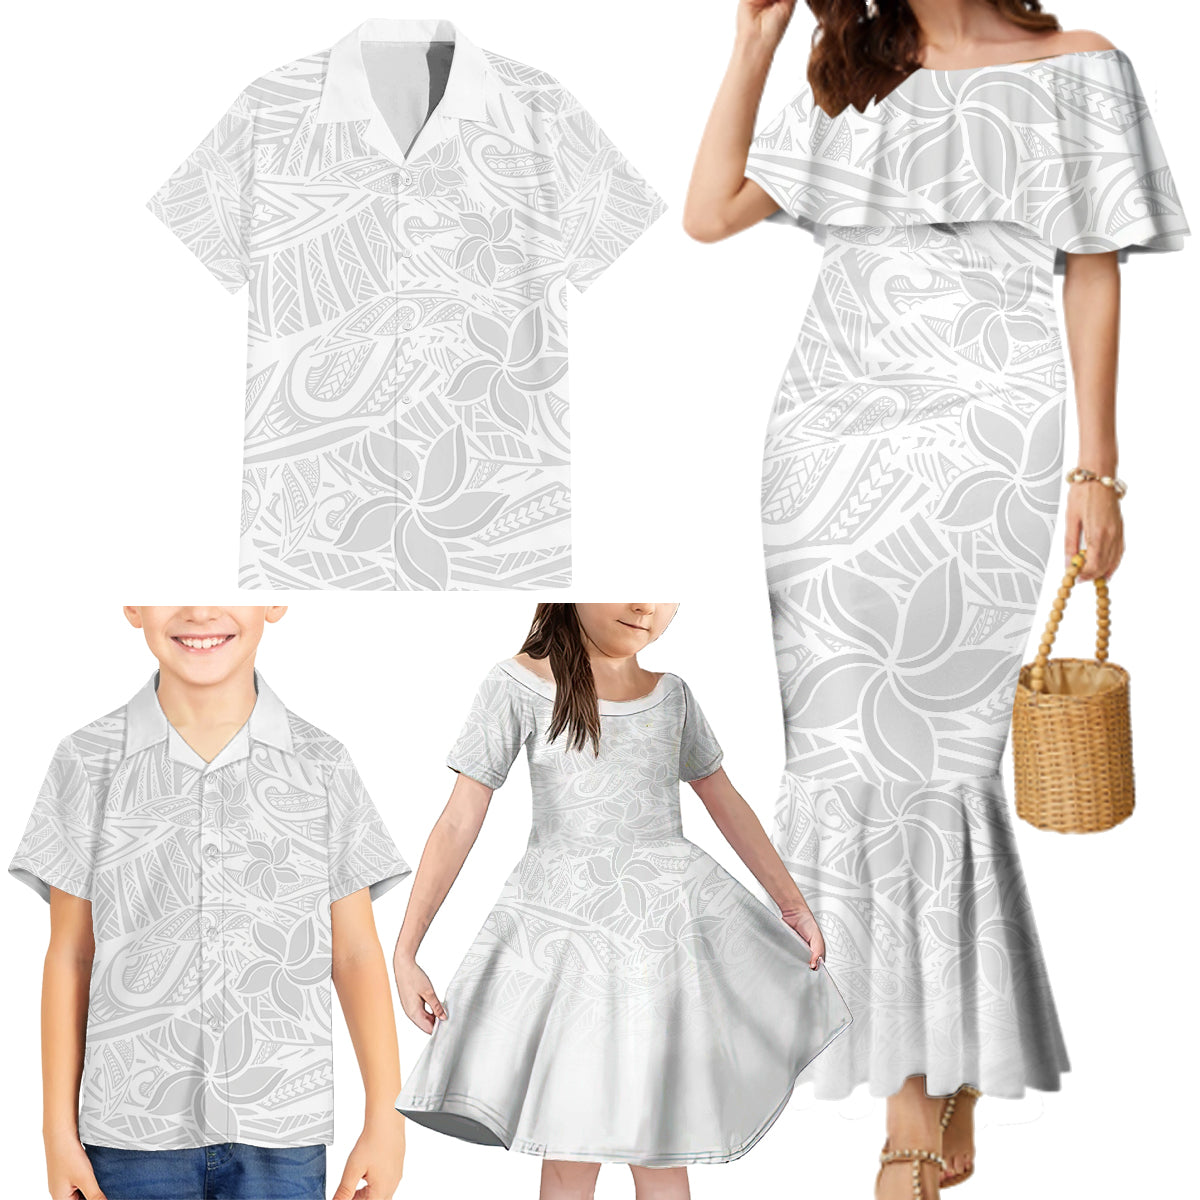 Polynesia White Sunday Family Matching Mermaid Dress and Hawaiian Shirt Polynesian Pattern With Tropical Flowers LT14 - Polynesian Pride